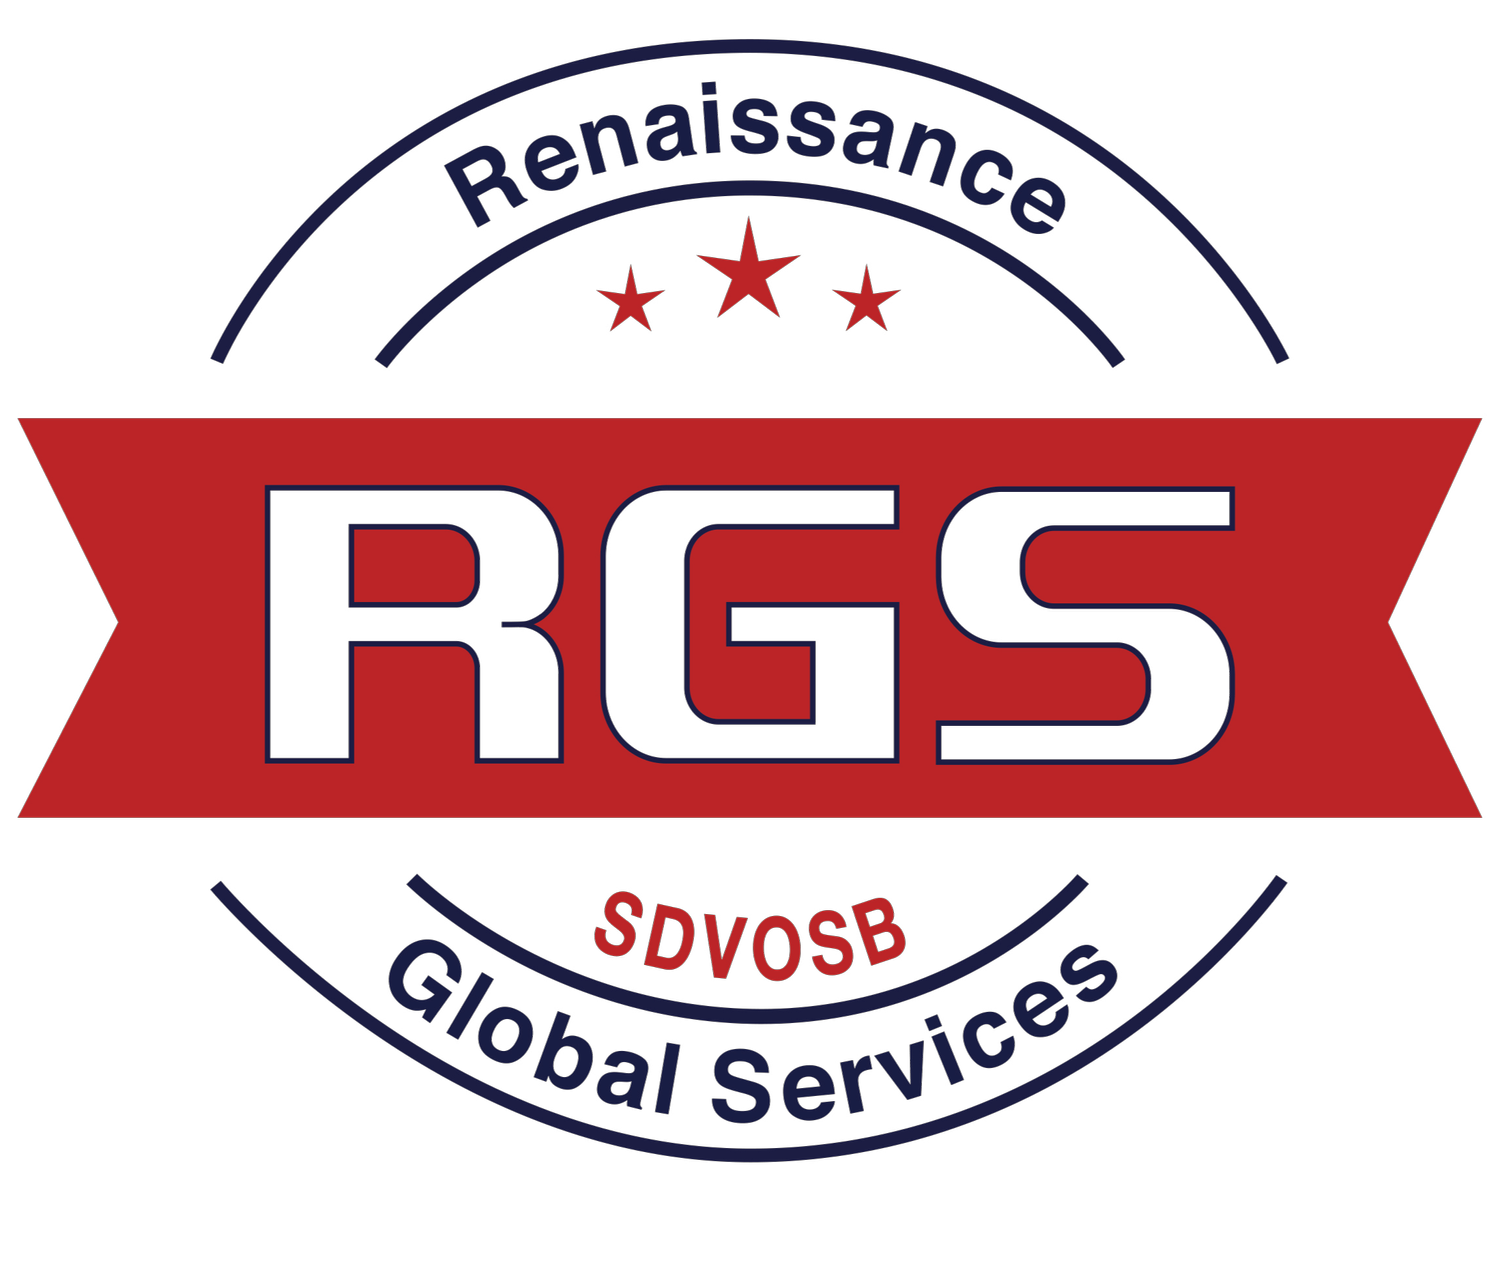 Renaissance Global Services, LLC